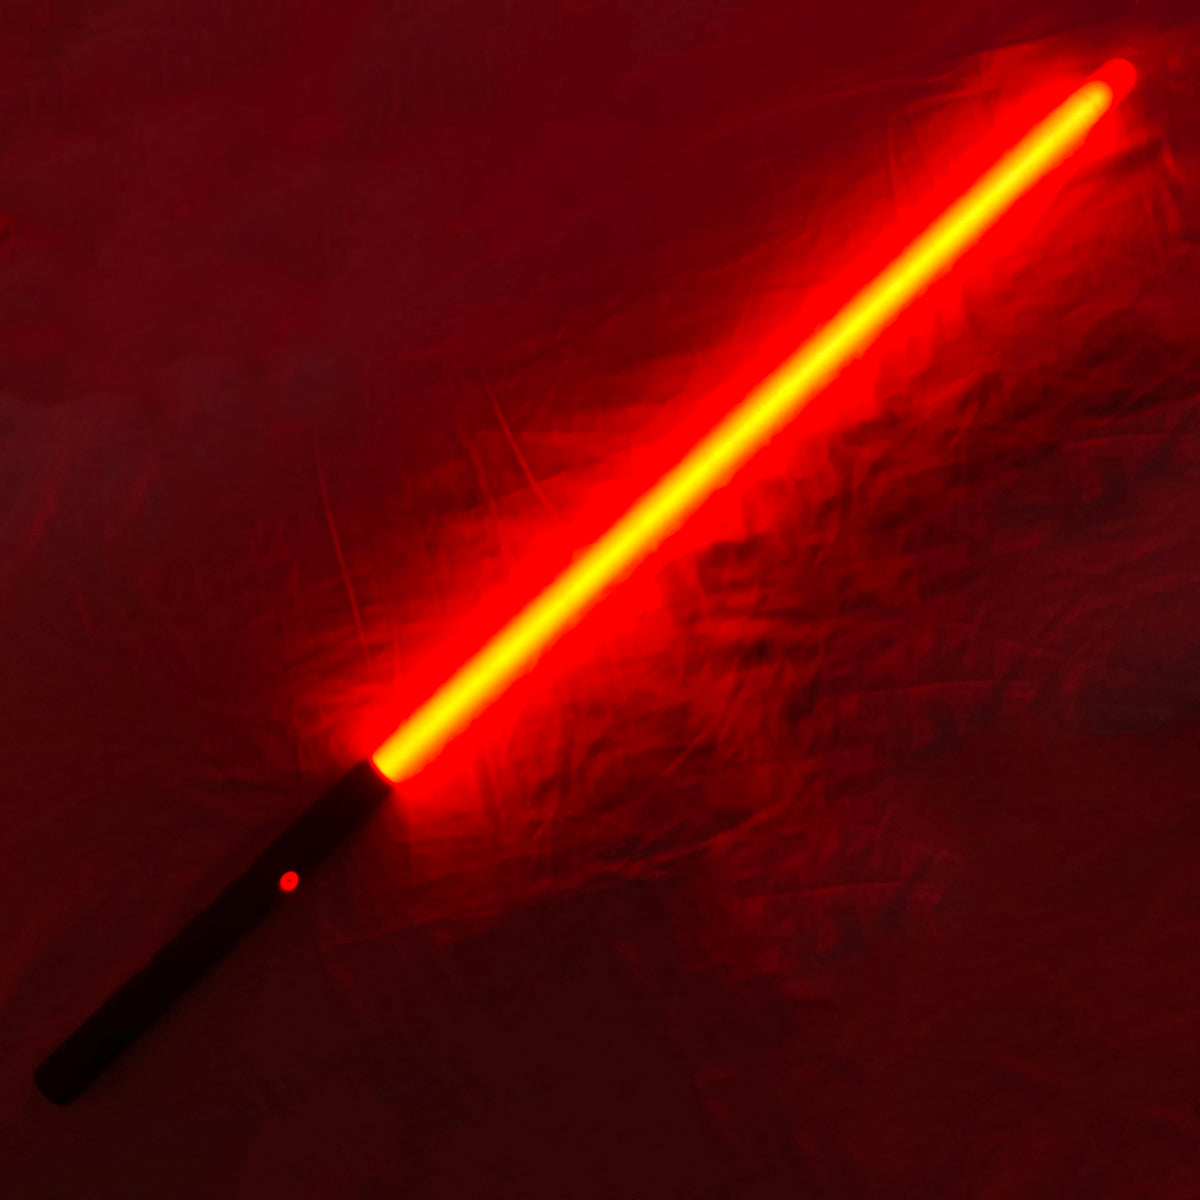  Star Wars Sword